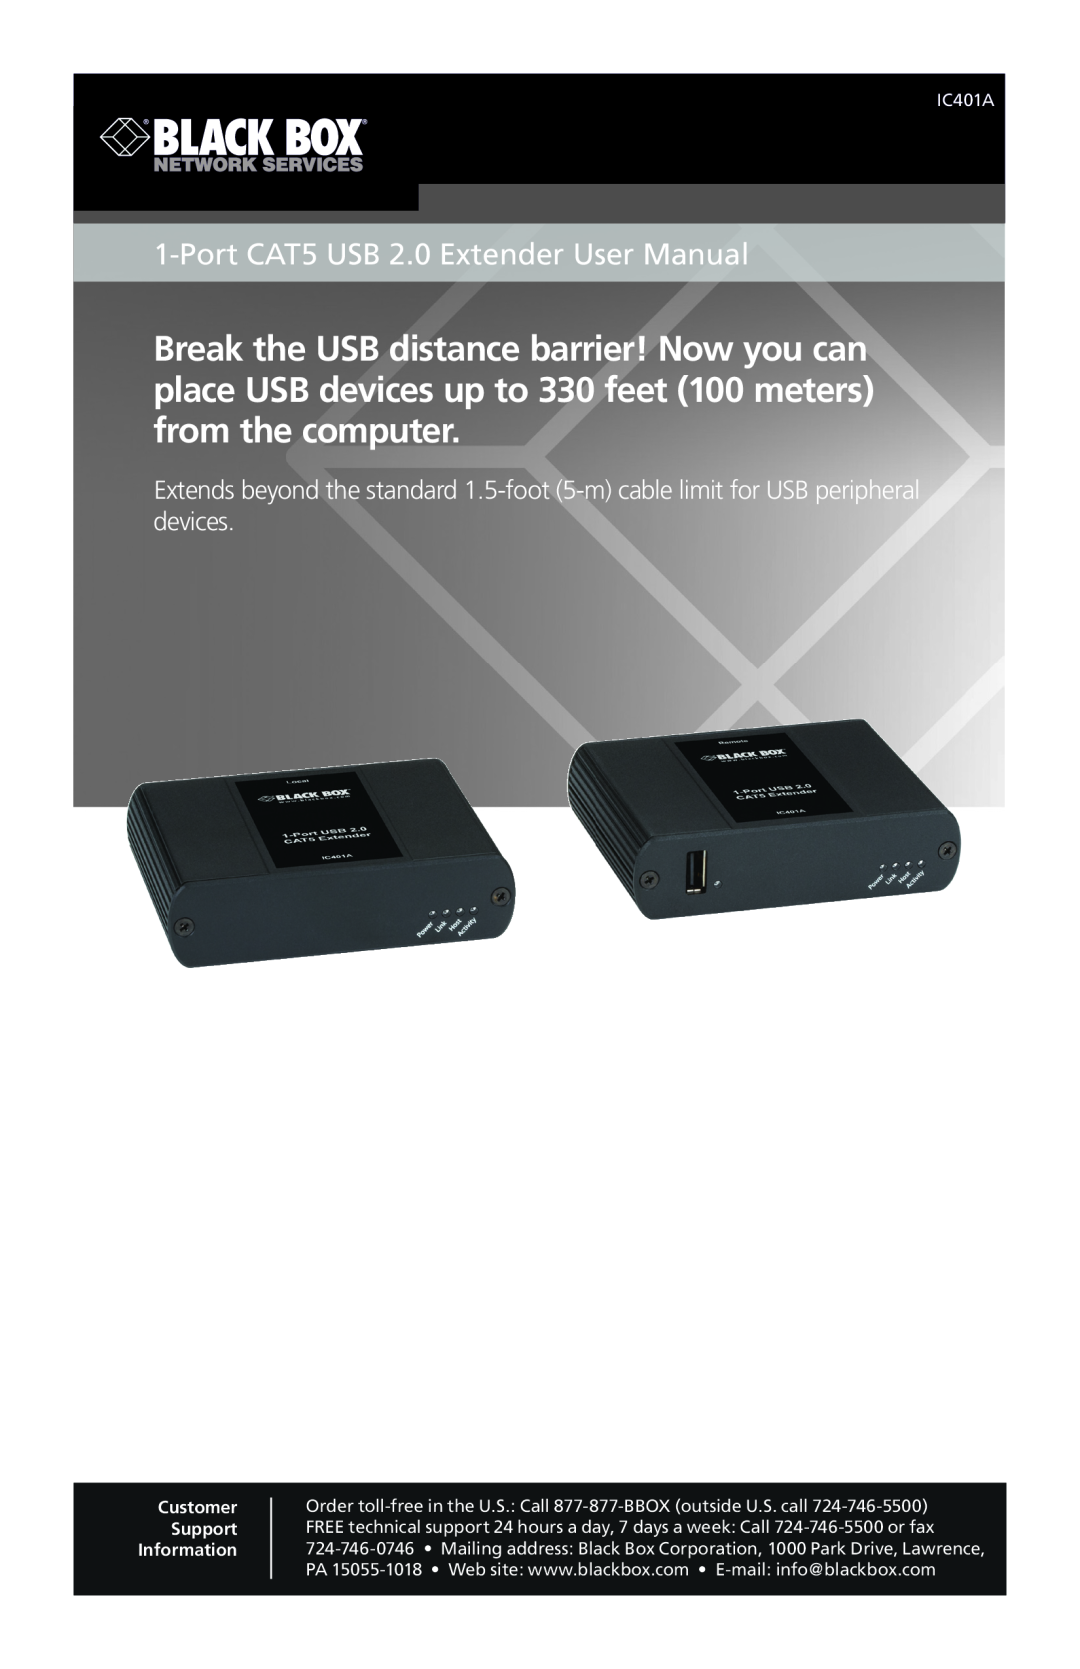 Black Box 1-Port CAT5 USB 2.0 Extender User Manua, IC401A user manual Customer Support Information 